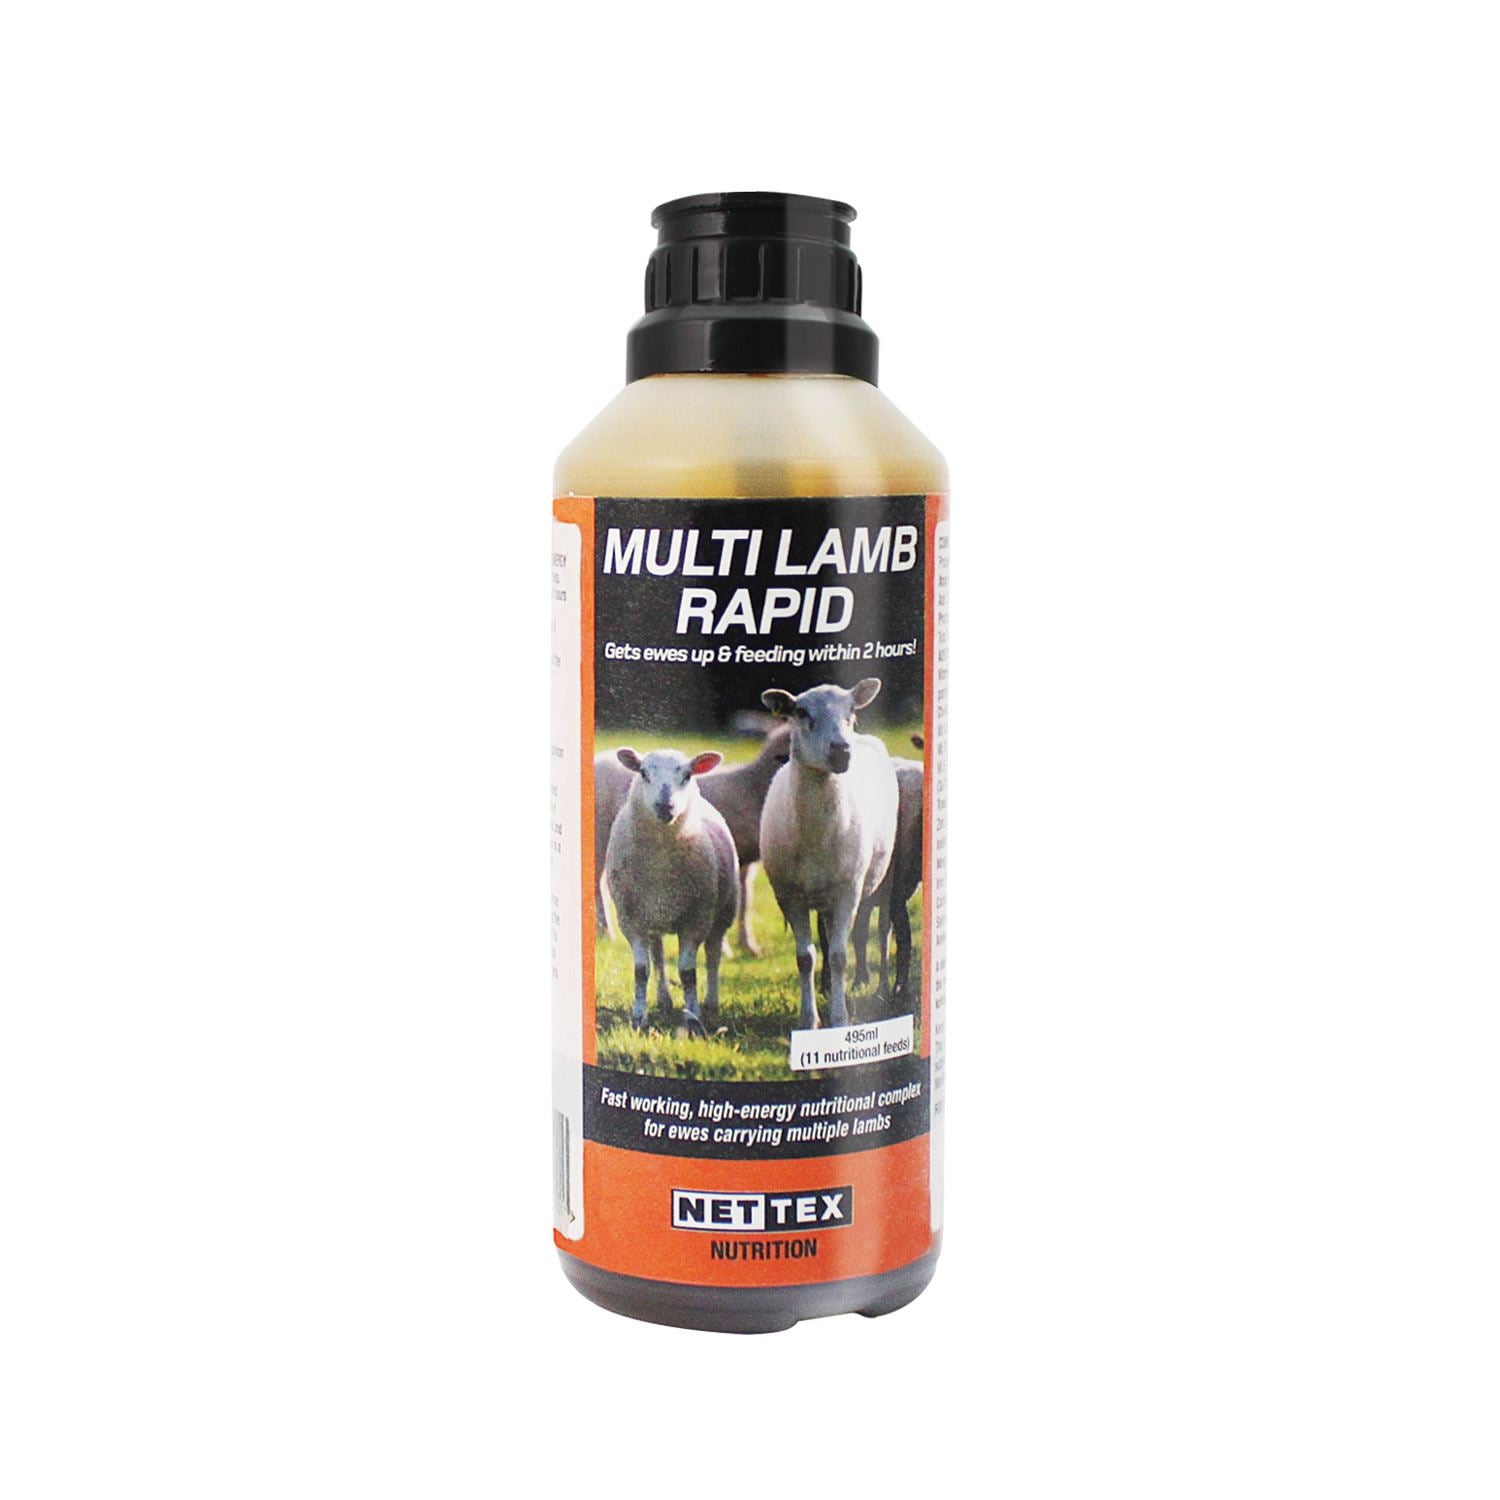 Nettex Multi Lamb Rapid - Just Horse Riders